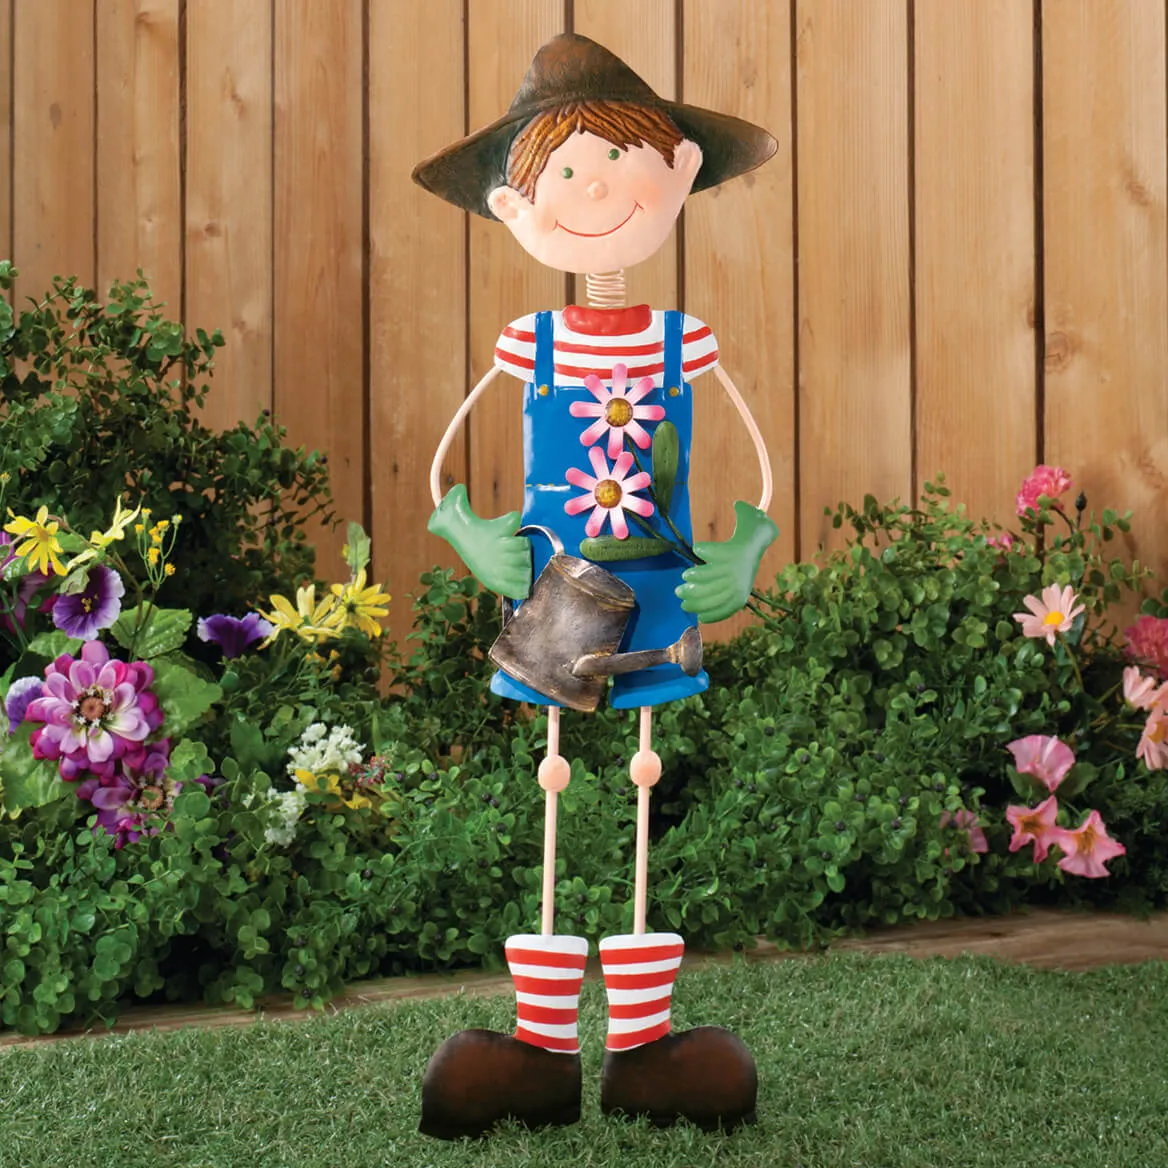 Adorable Gardening BOY or GIRL Yard Stake Metal Outdoor Spring Lawn Home Decor - $34.83 - $68.68